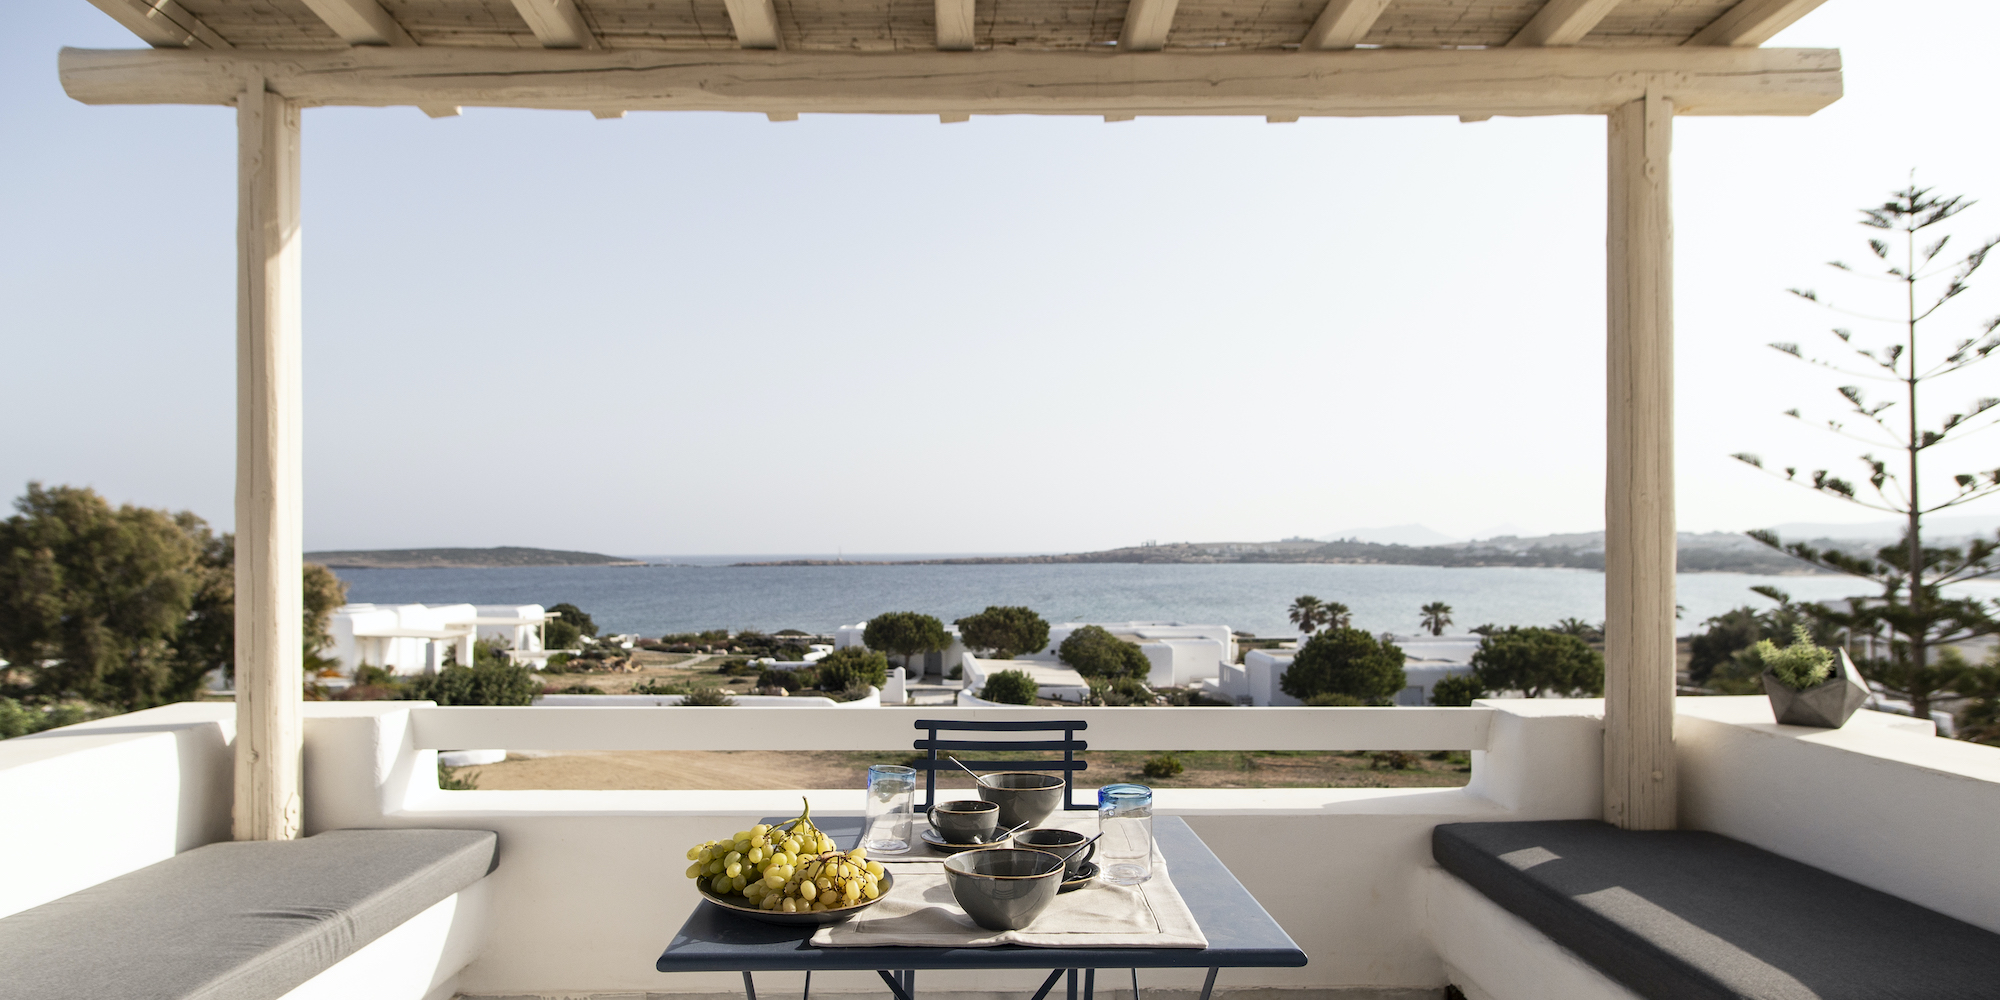 Villas in paros greece : seaside view